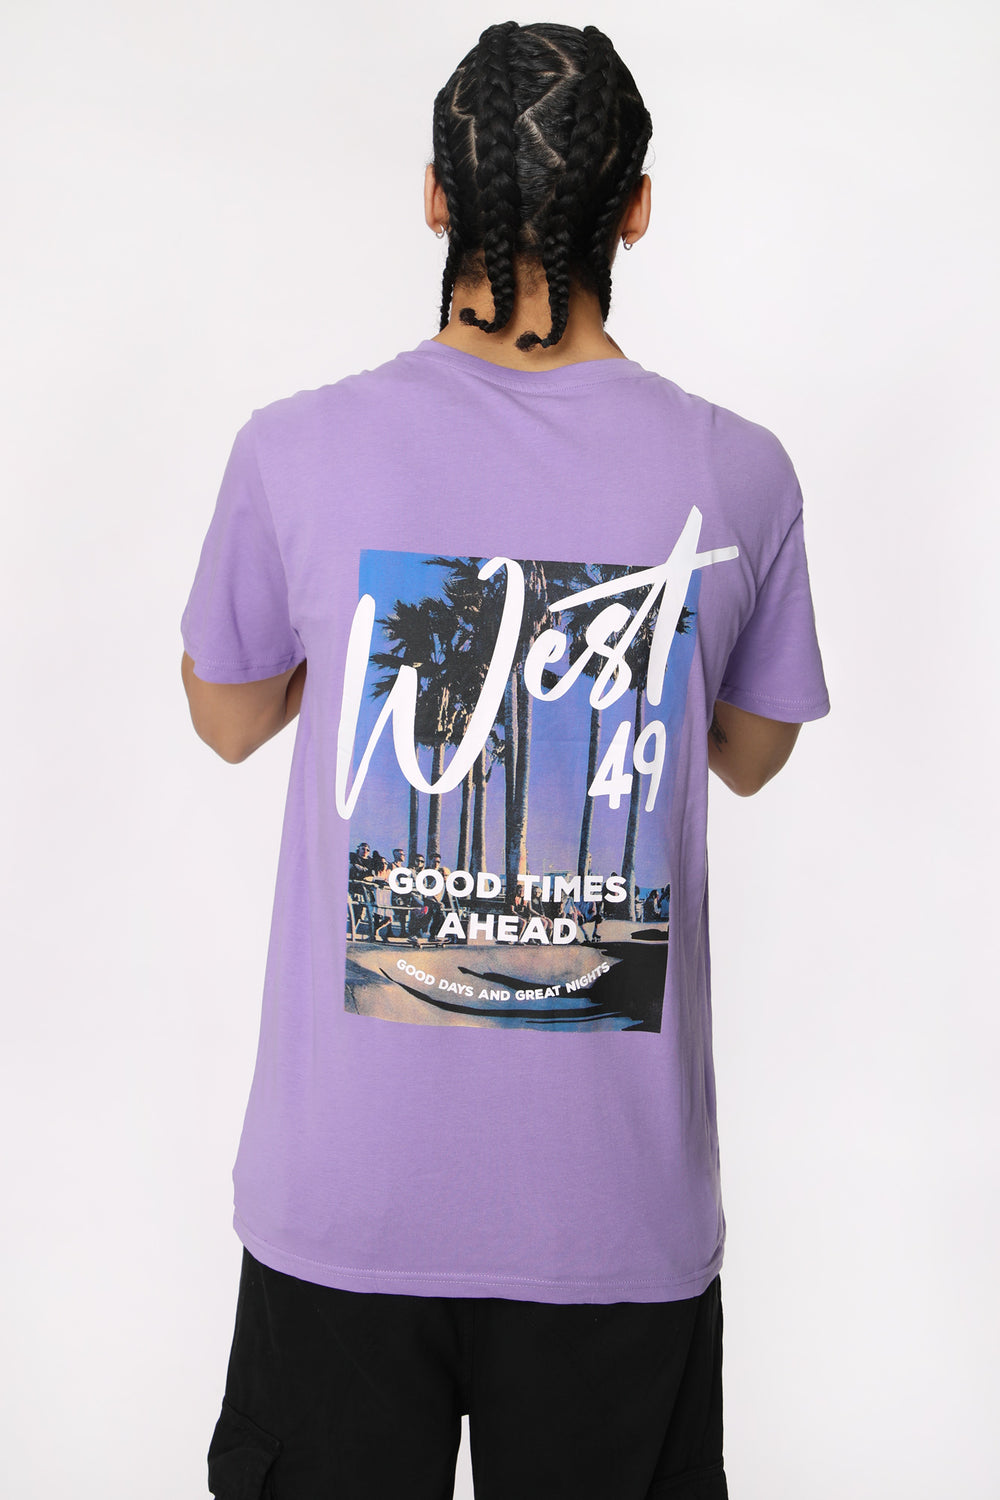 West49 Mens Good Times Ahead T-Shirt West49 Mens Good Times Ahead T-Shirt